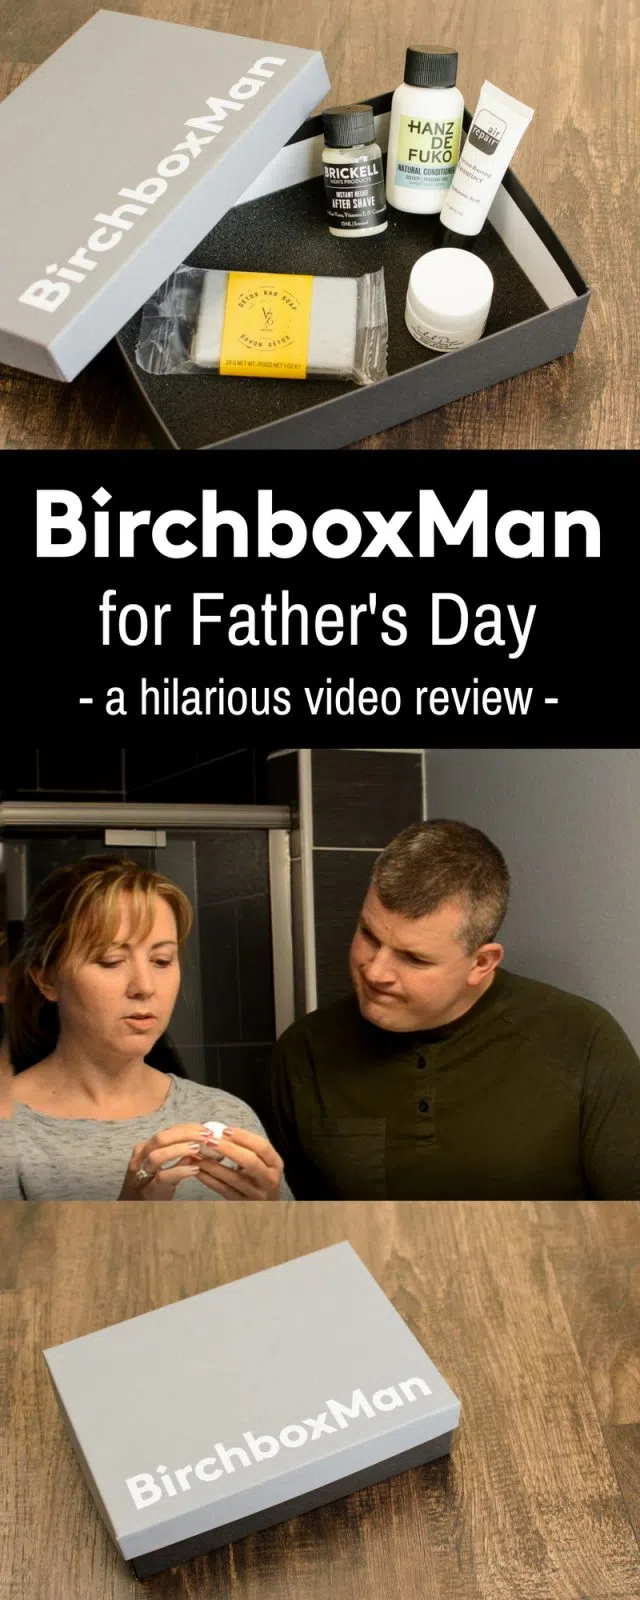 Birchbox Man - A video review of the men's grooming birchbox #birchbox #birchboxmen #fathersday